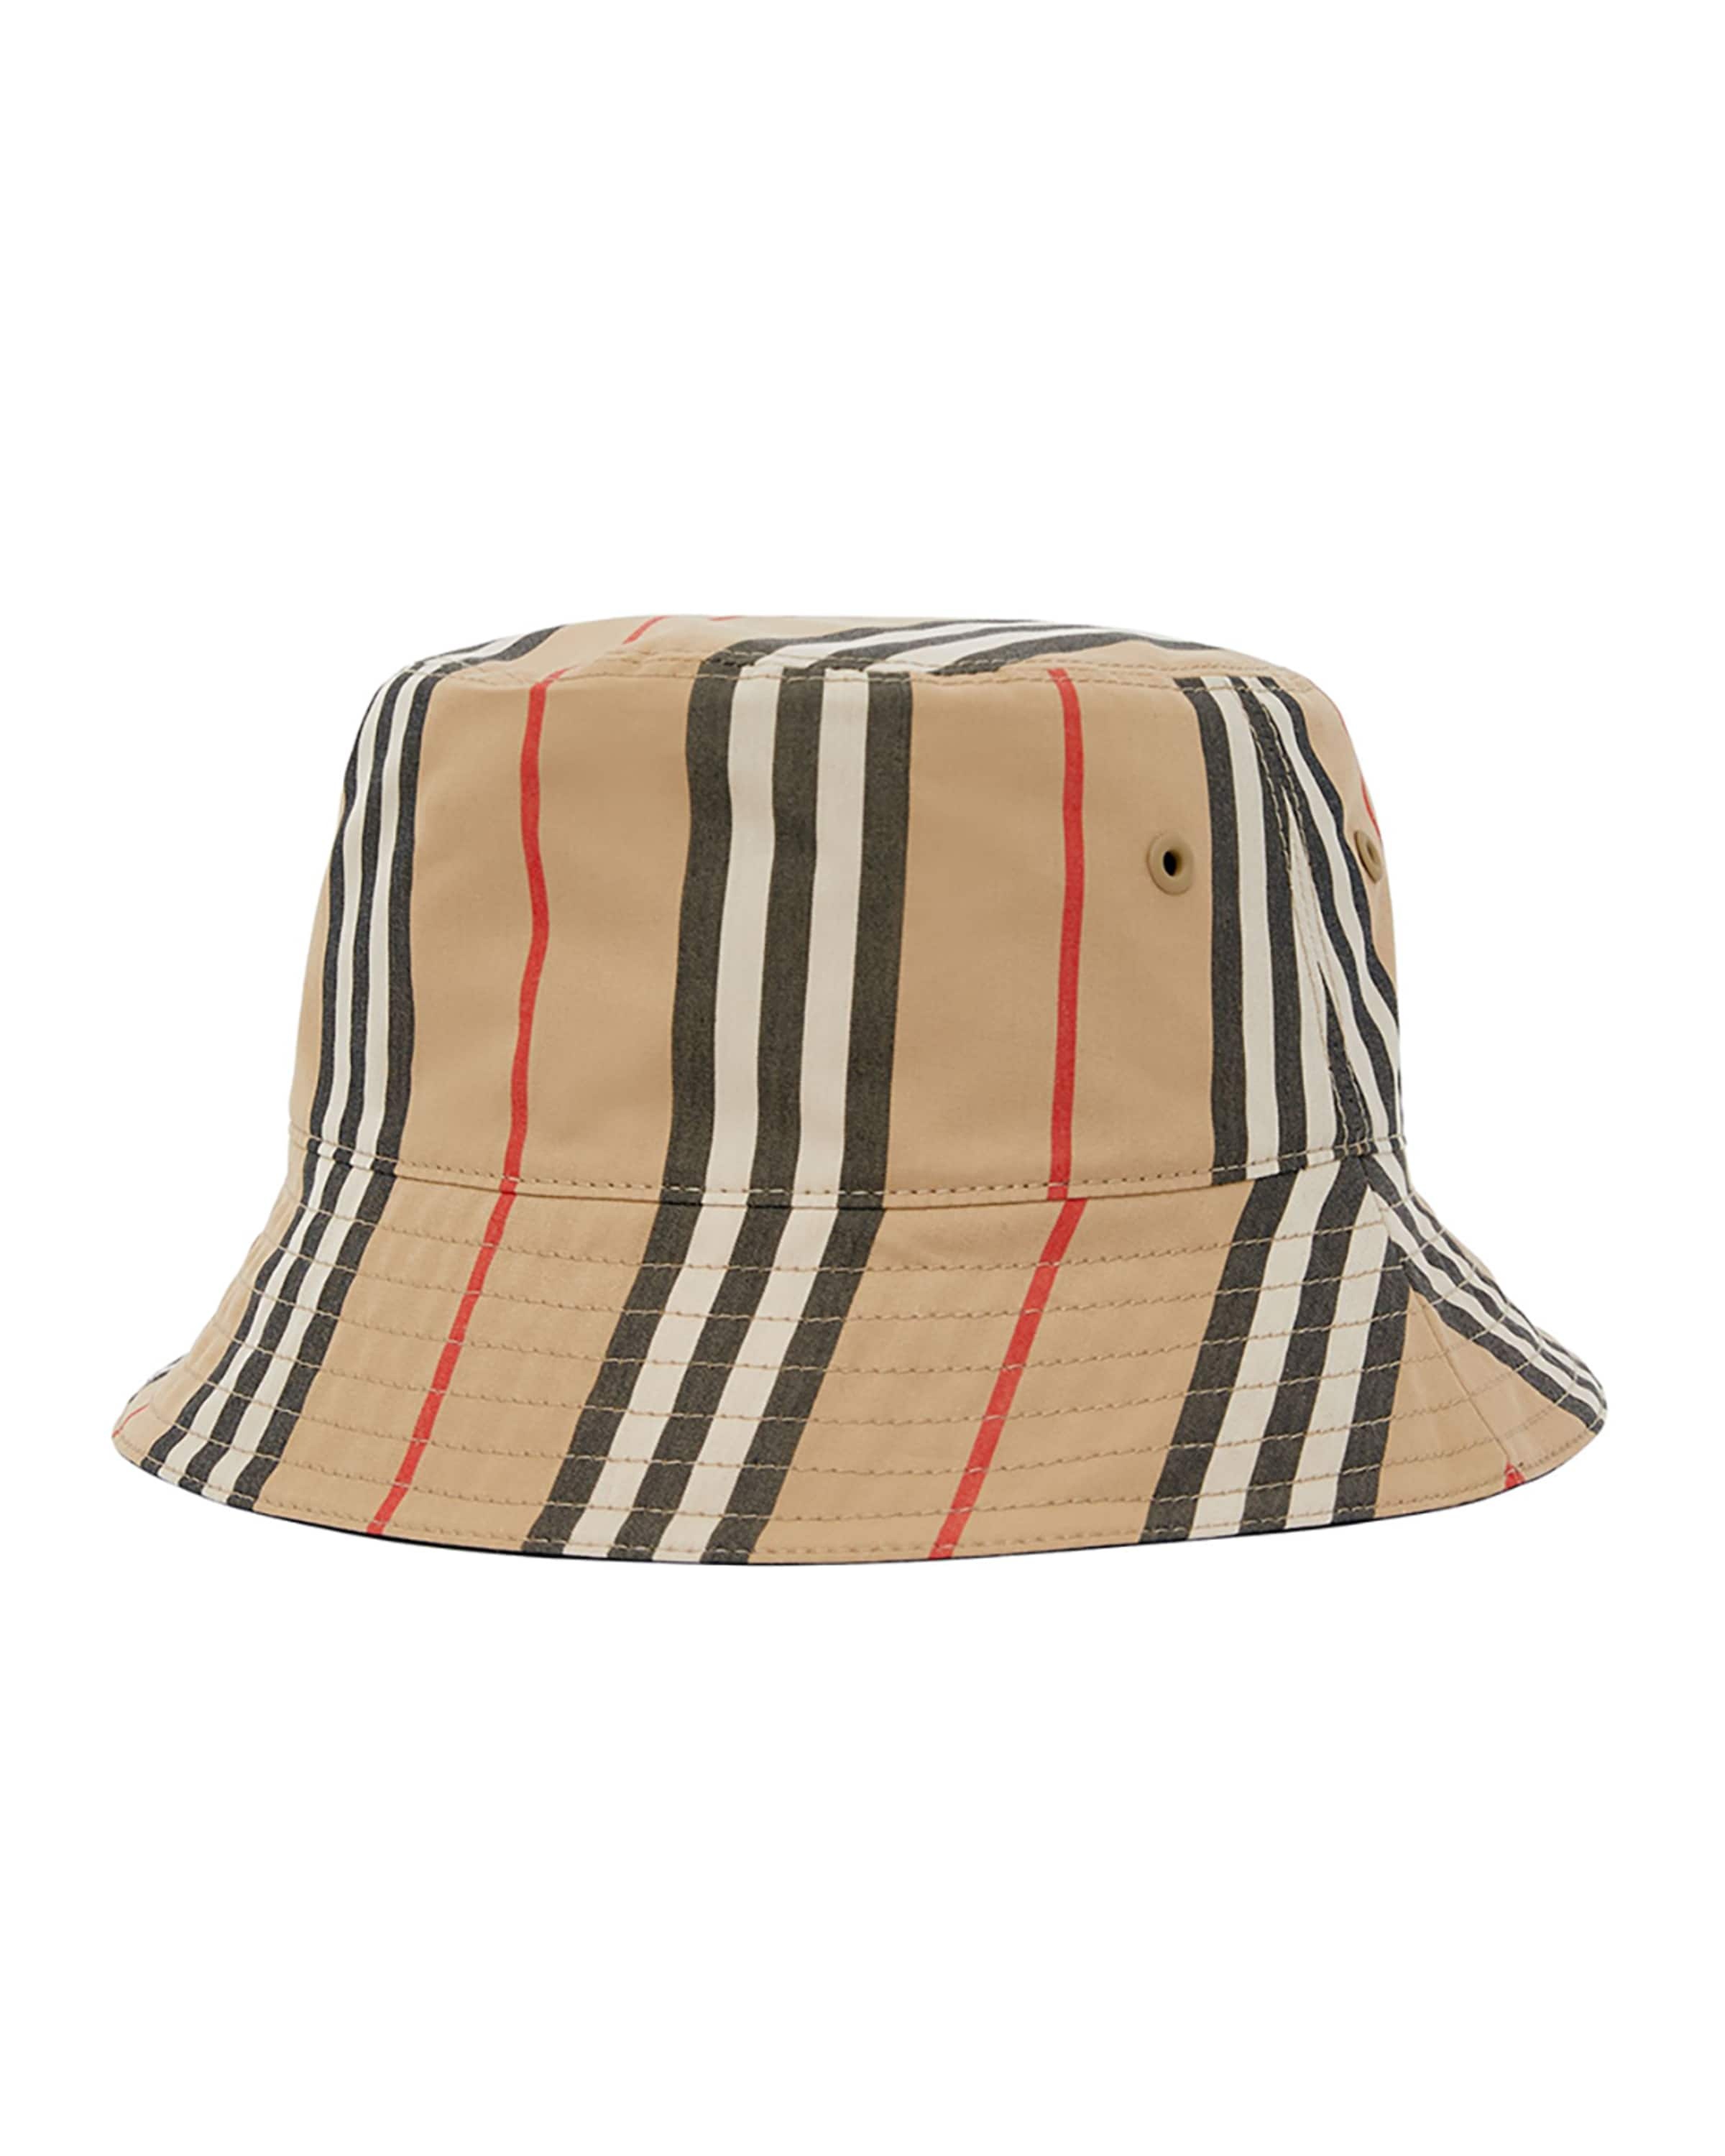 Burberry mens rain hat. L. $850